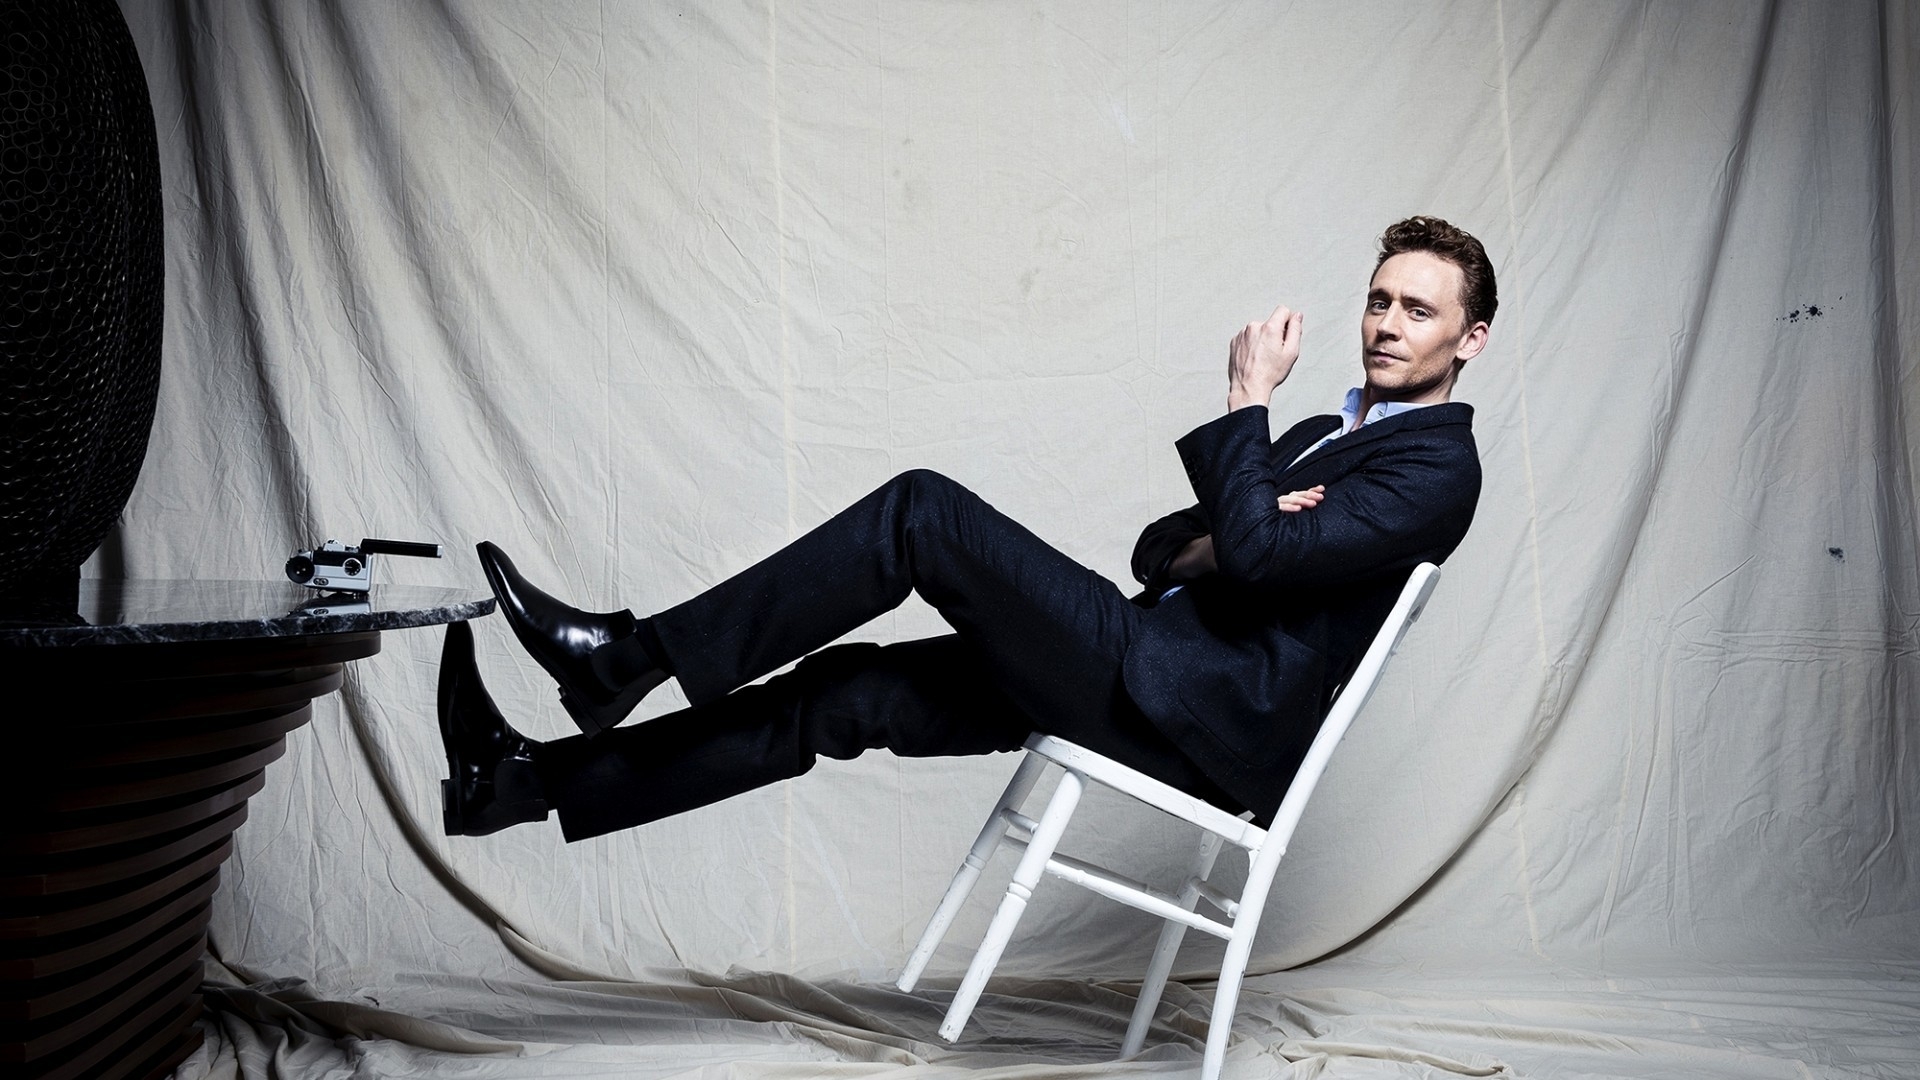 Tom Hiddleston Photo Session for 1920 x 1080 HDTV 1080p resolution